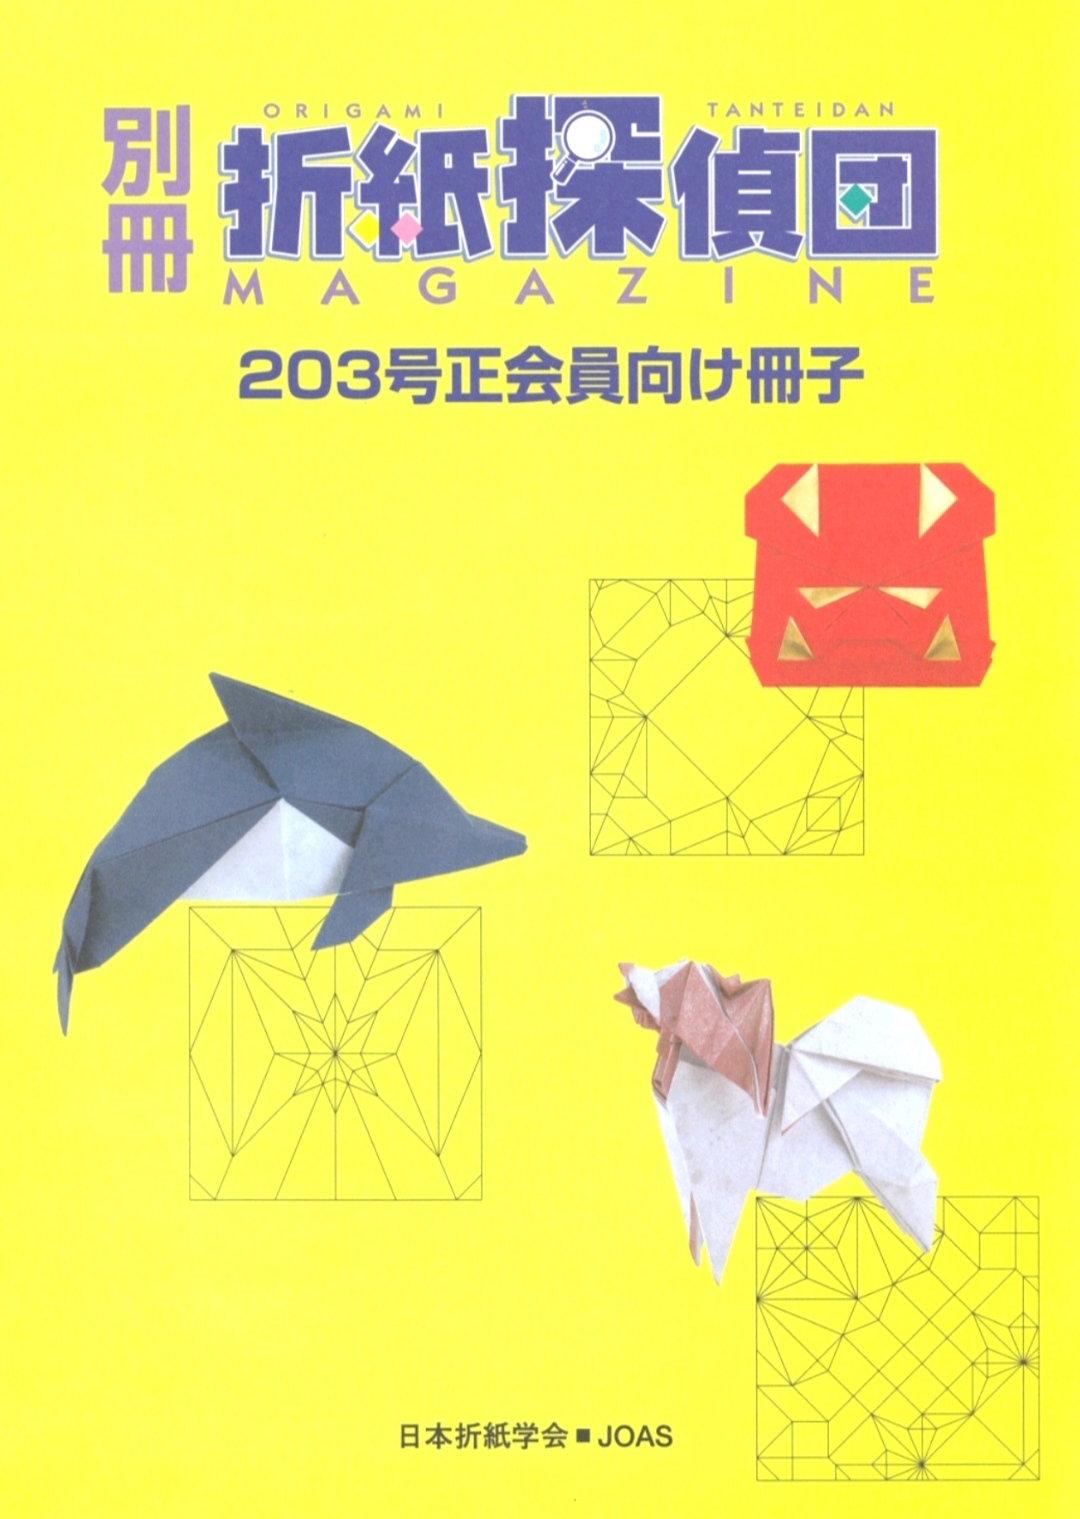 Origami Tanteidan Magazine 203 extra